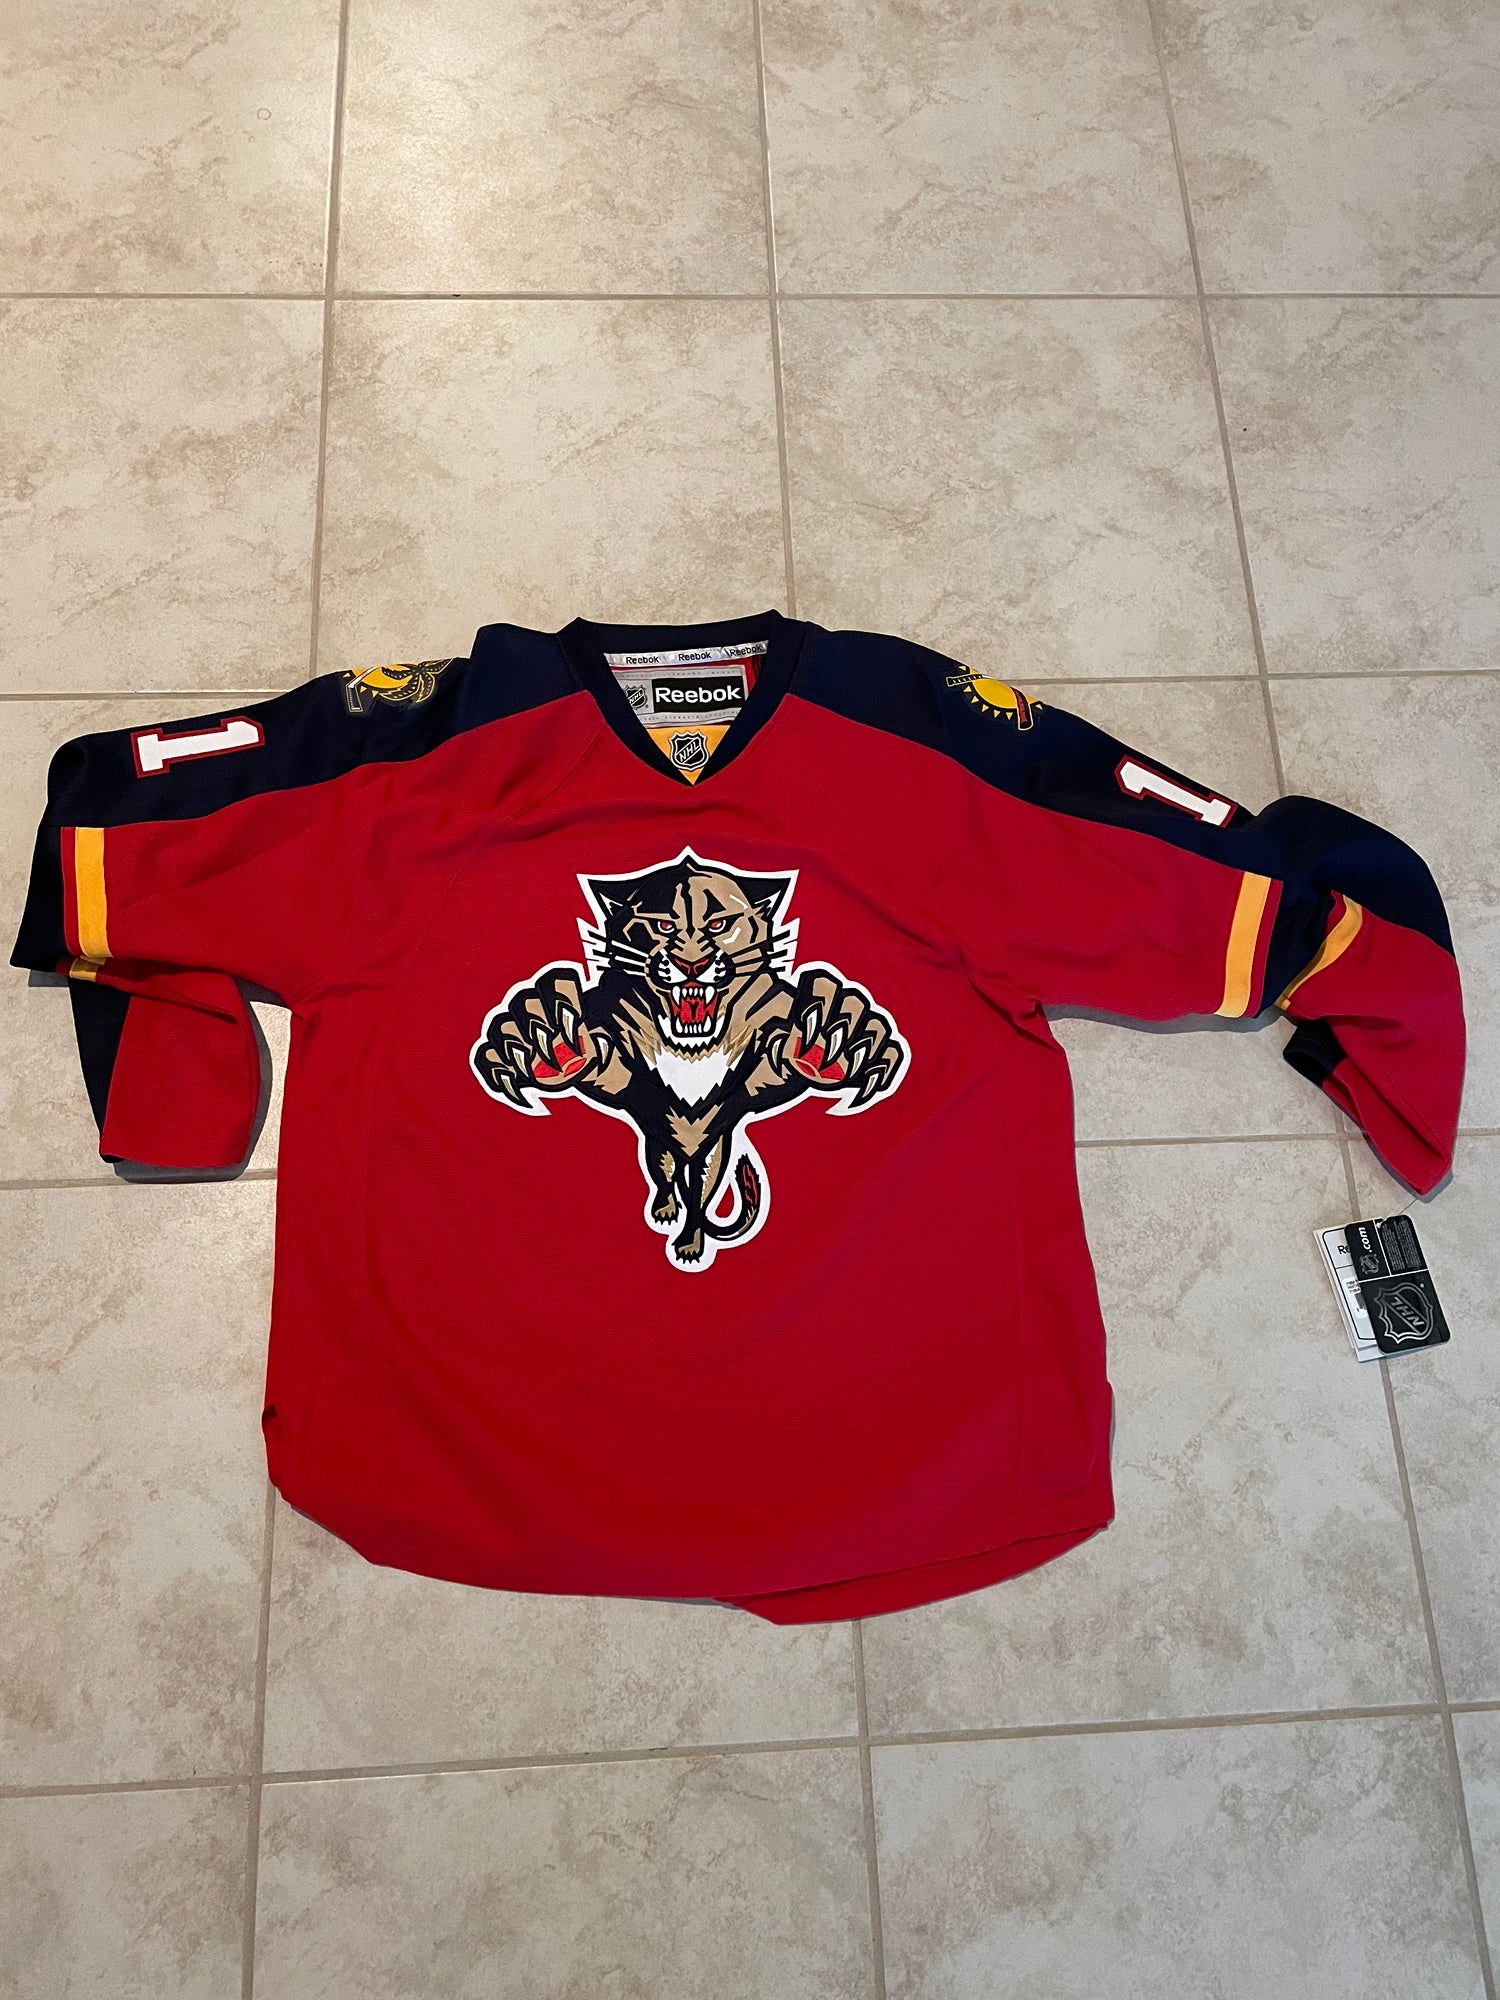 Florida Panthers x Miami Vice Alternate Jersey *CONCEPT* : r/hockey